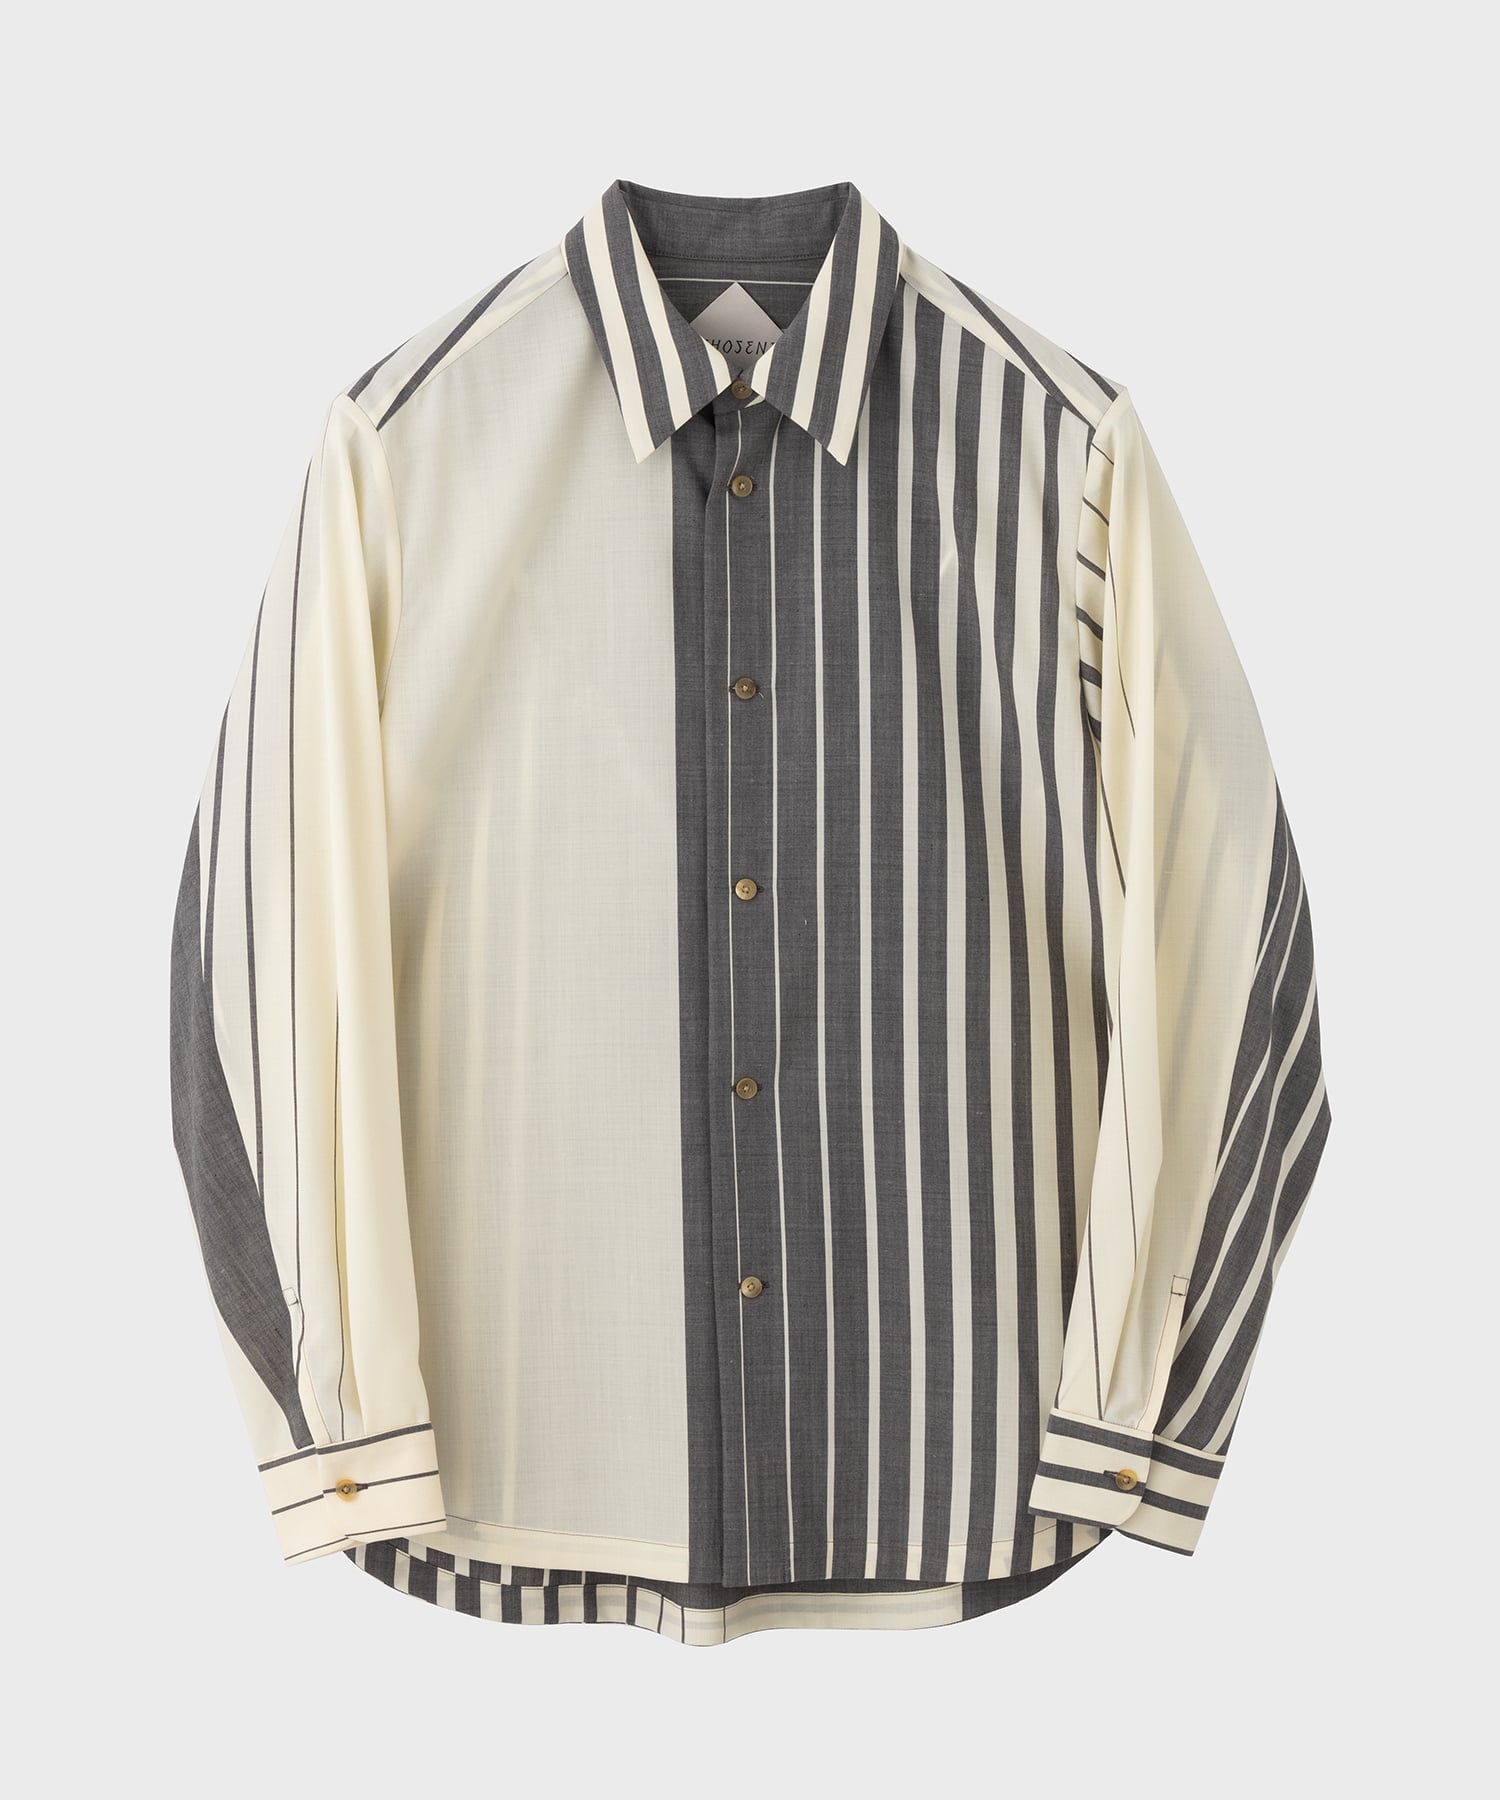 Irregular stripe shirt